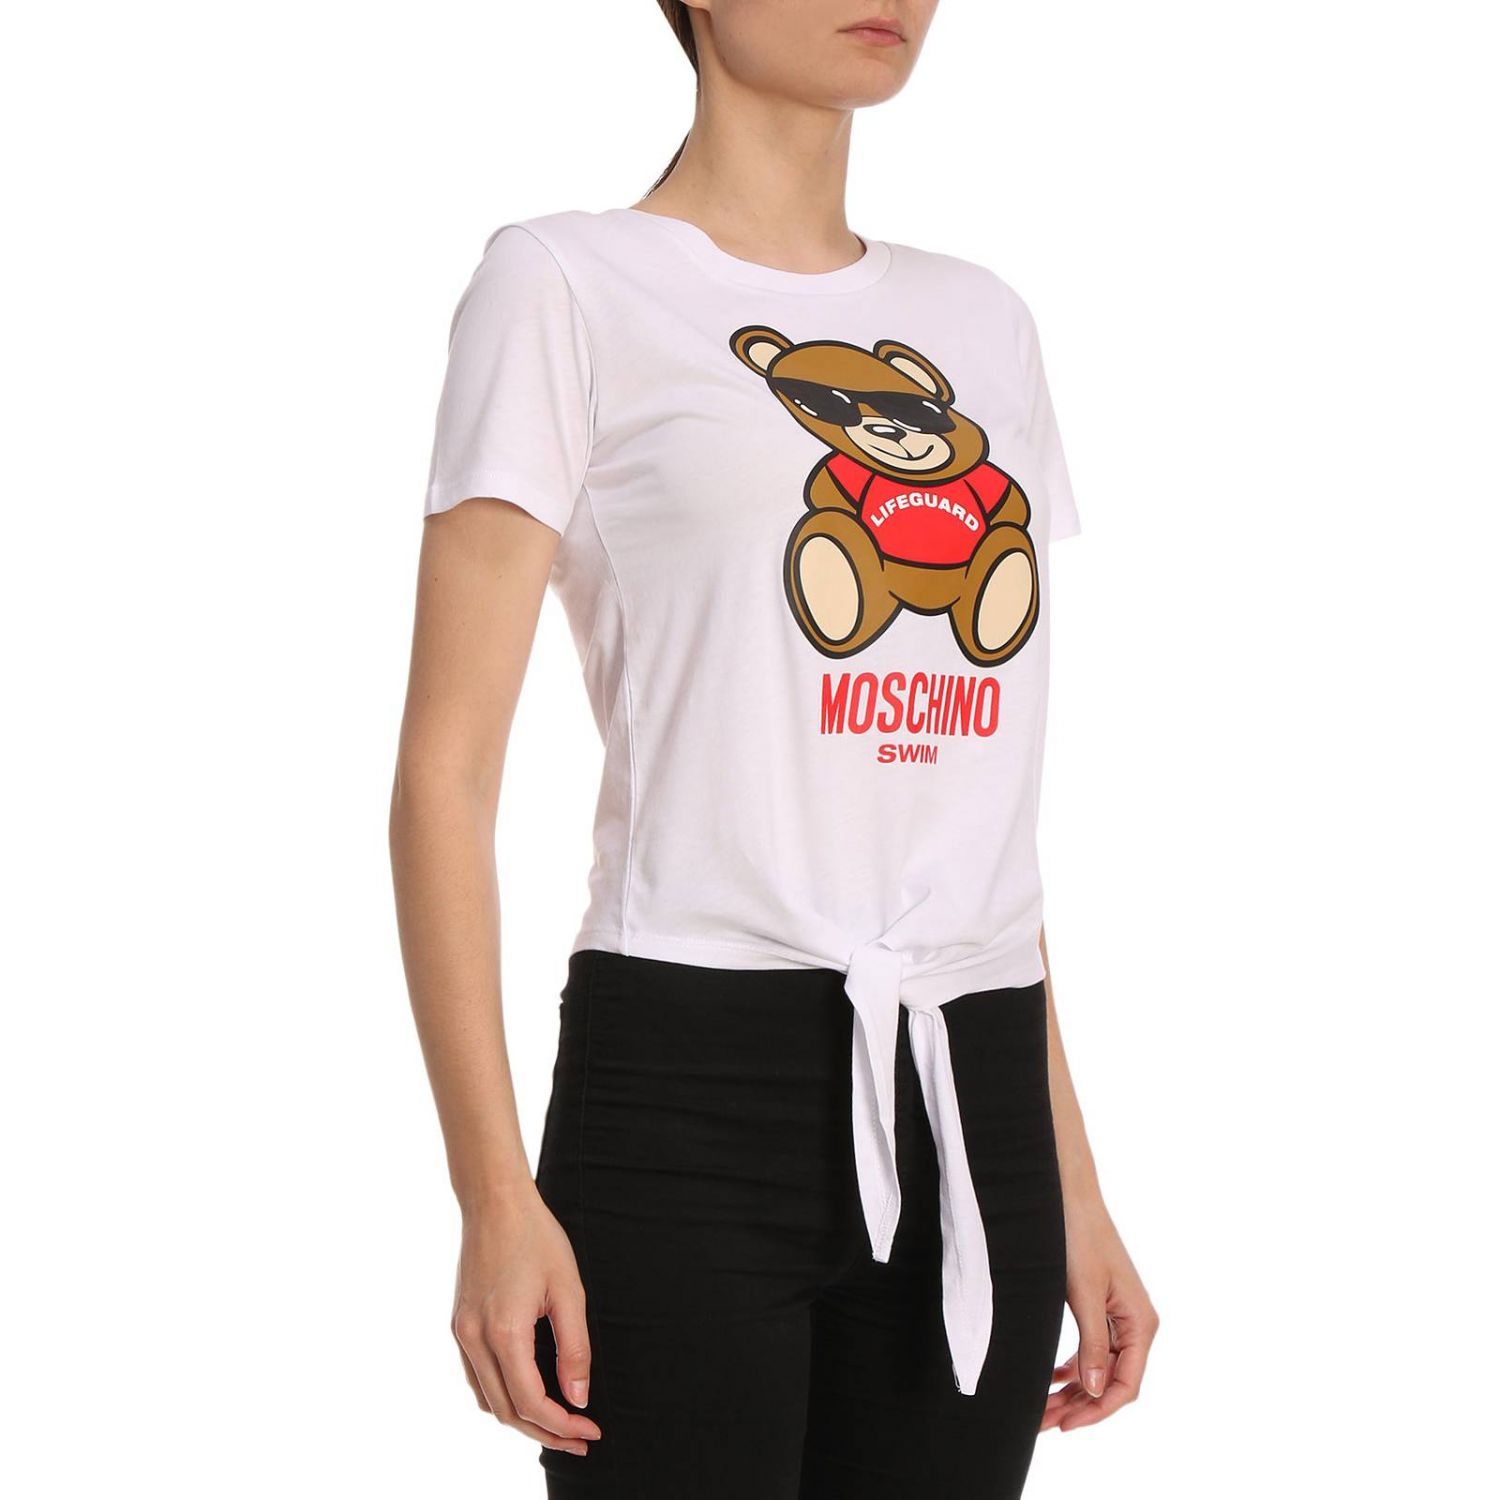 Boutique Moschino Outlet: T-shirt women | T-Shirt Boutique Moschino ...